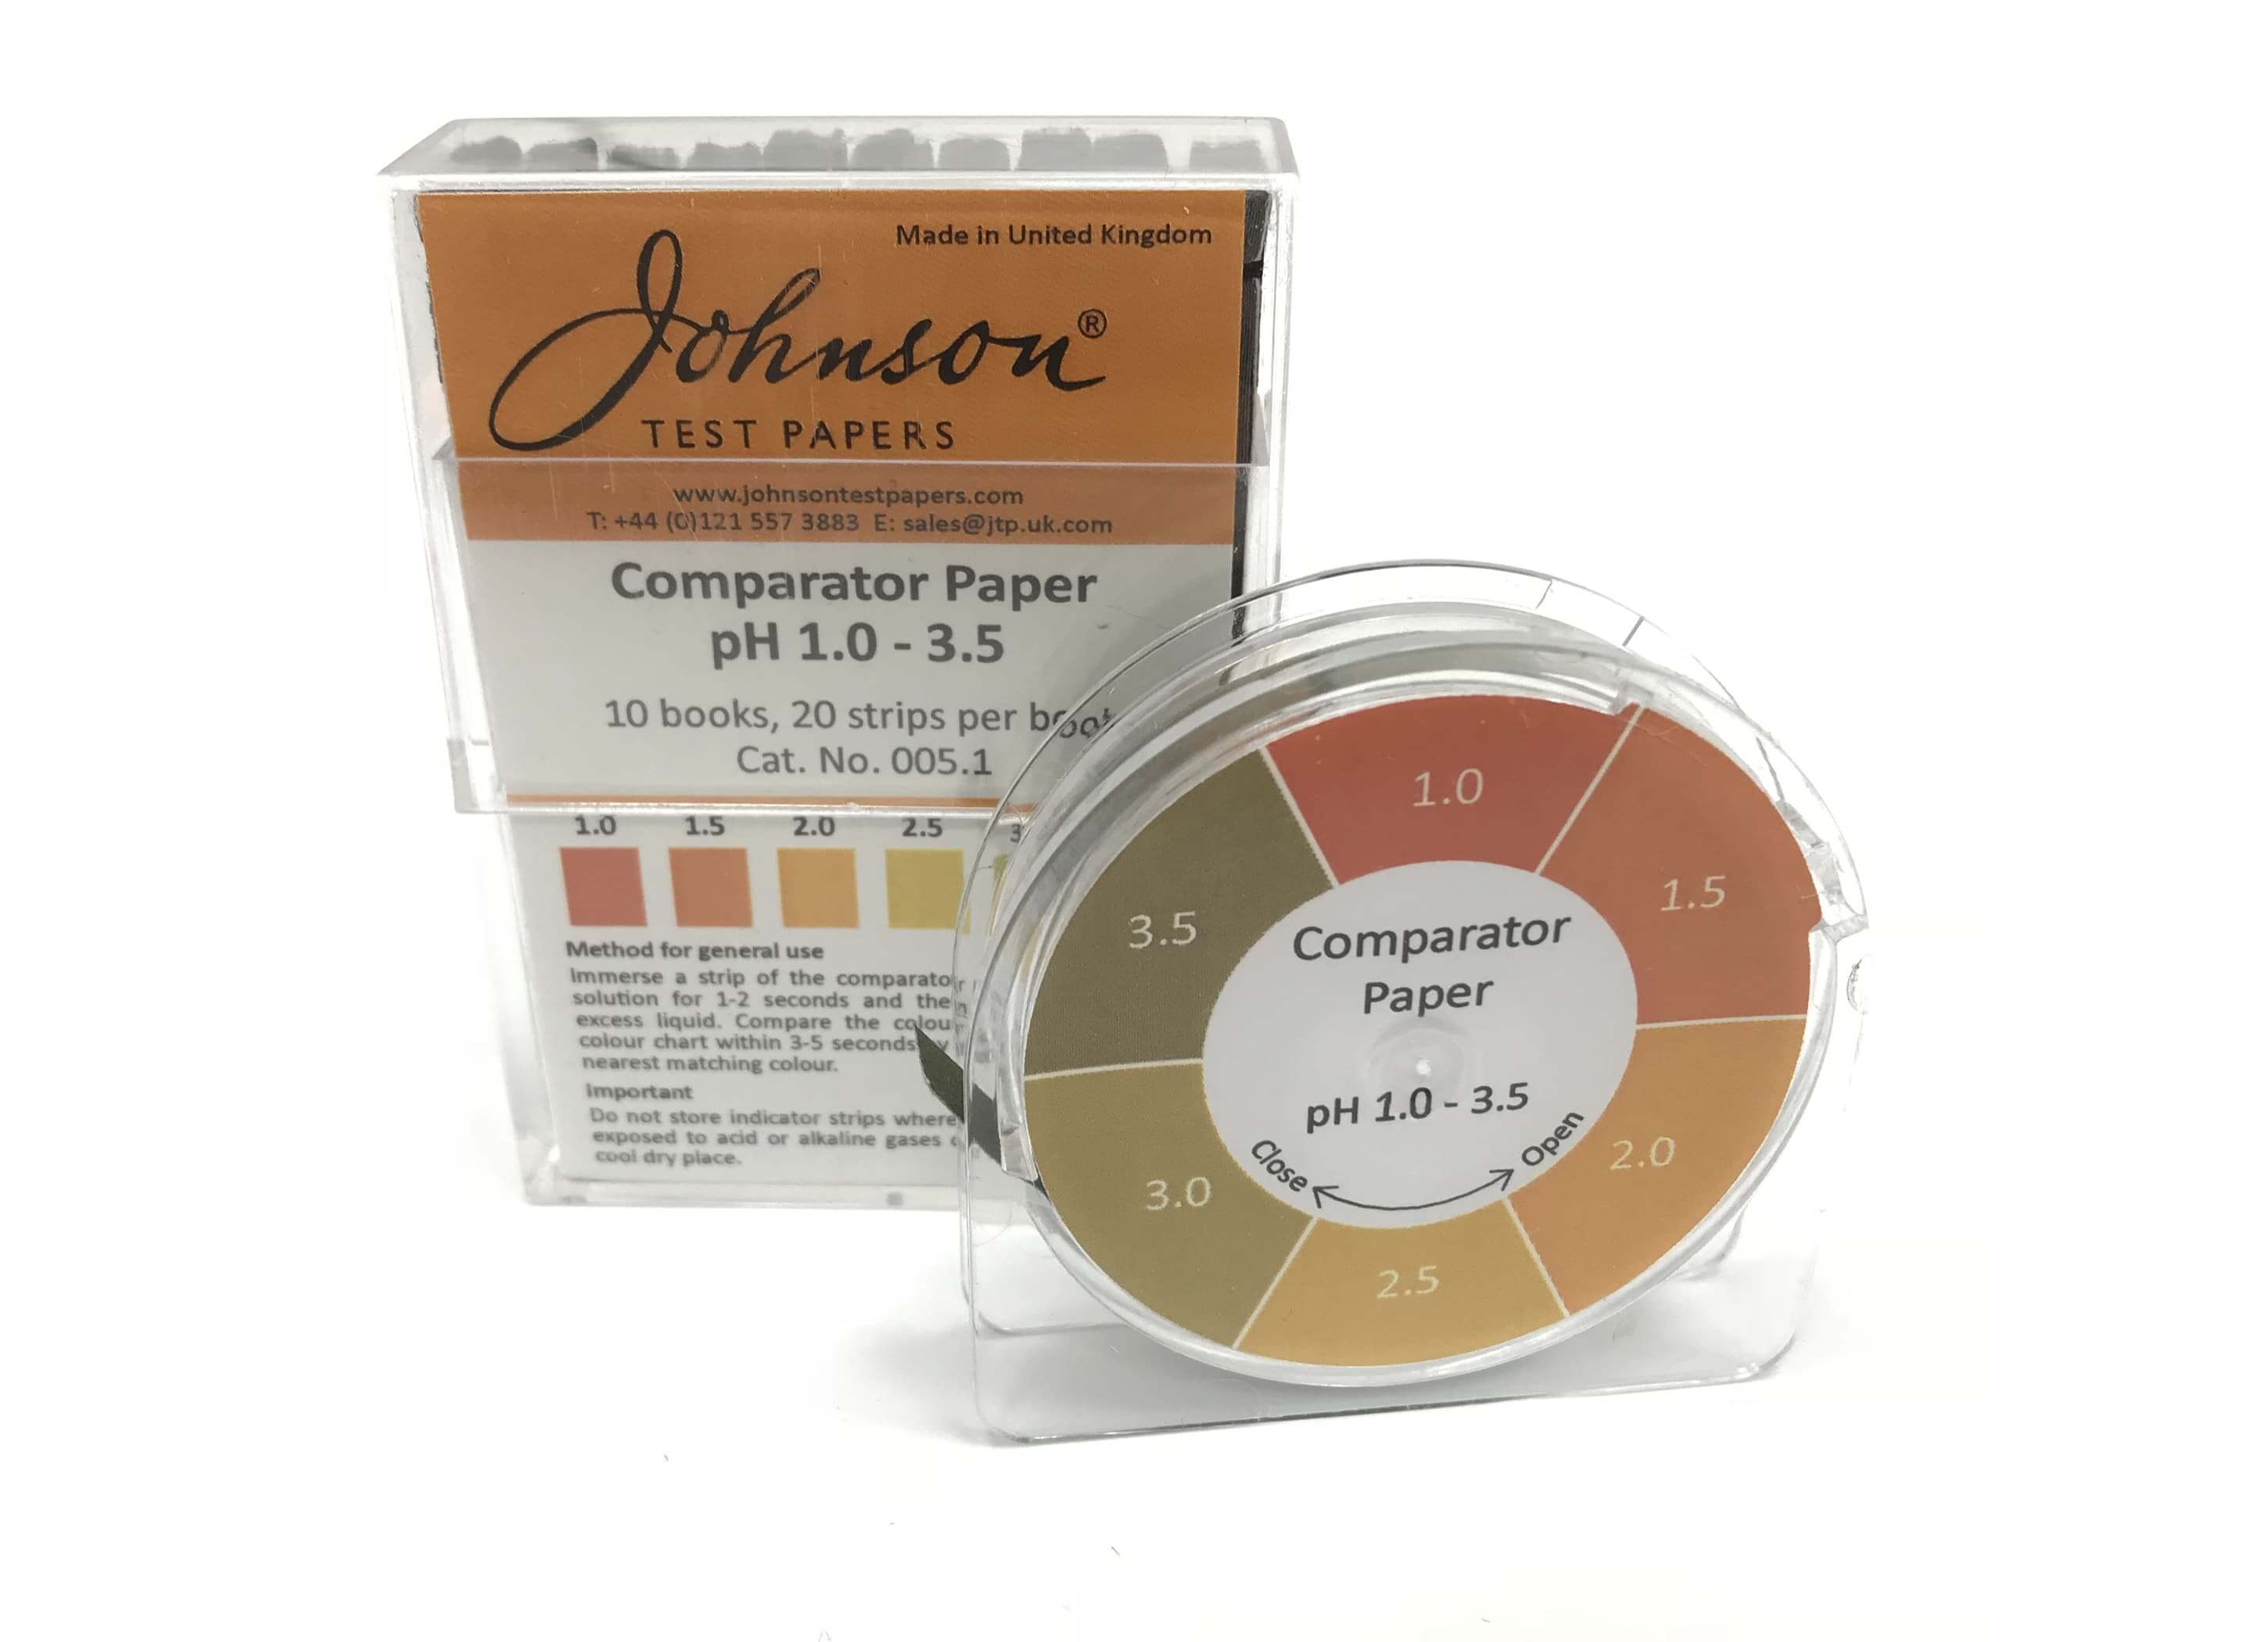 Comparator Paper pH 1.0 - 3.5